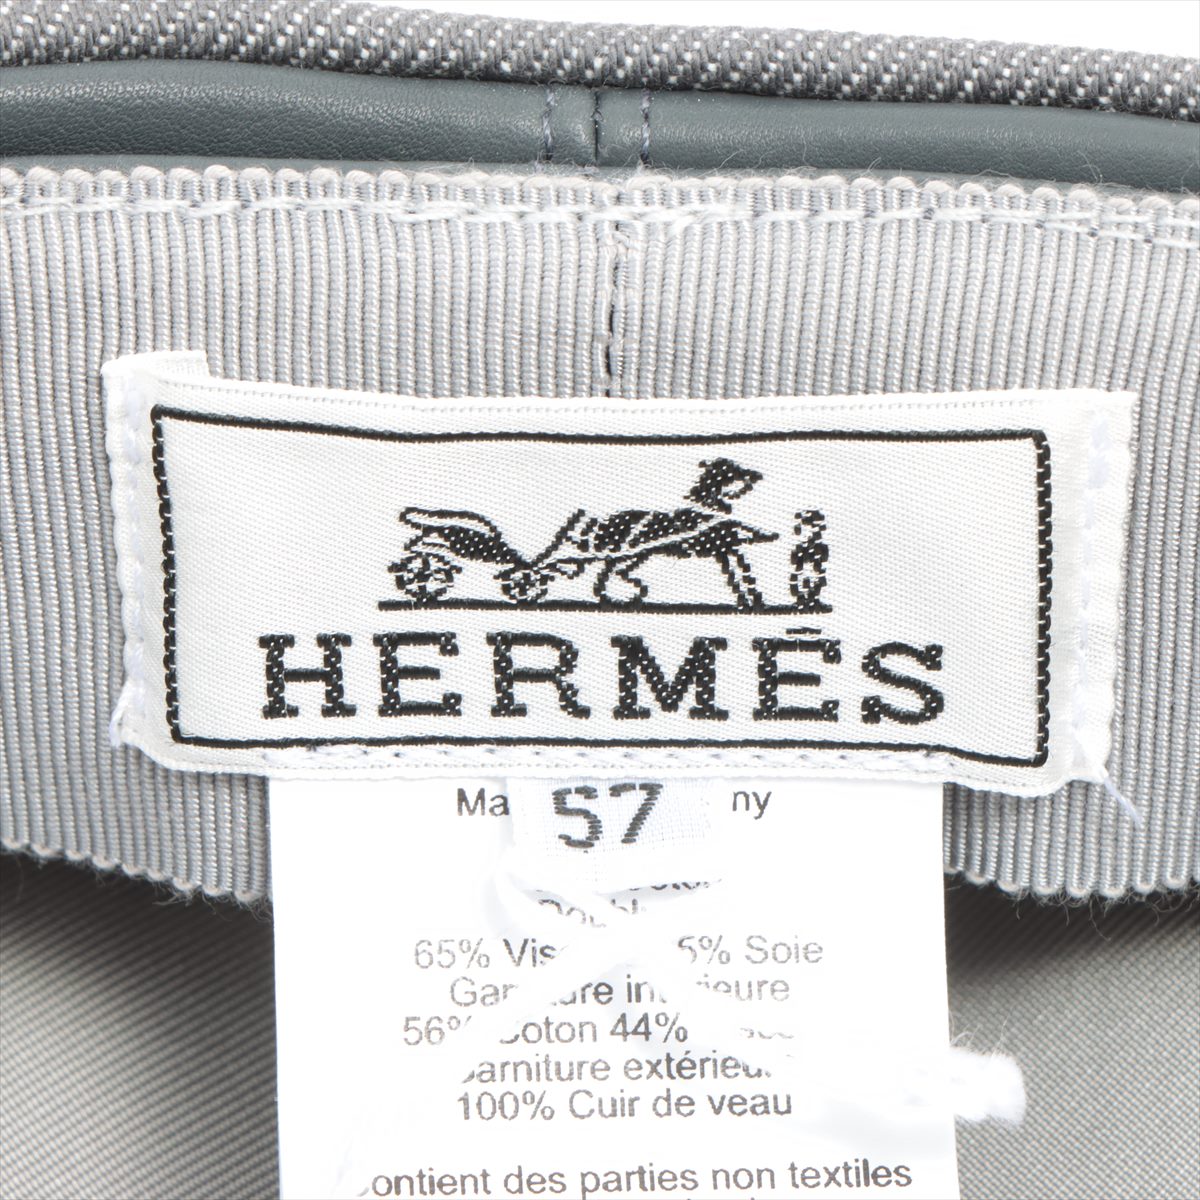 Hermès Newsboy cap Hat Cotton Grey